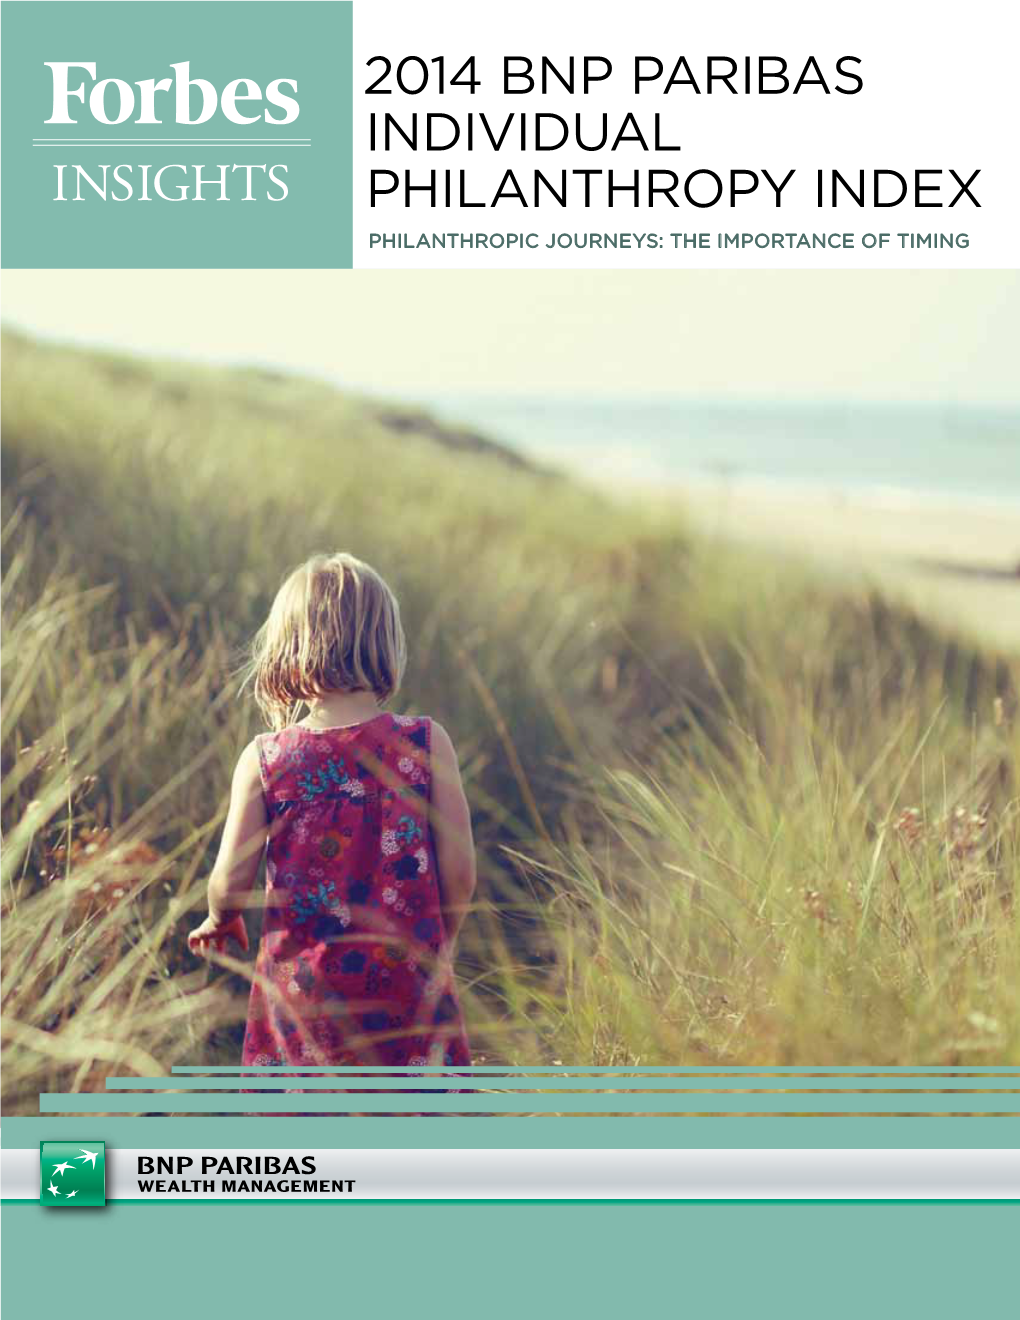 Forbes Insights: 2014 BNP Paribas Individual Philanthropy Index